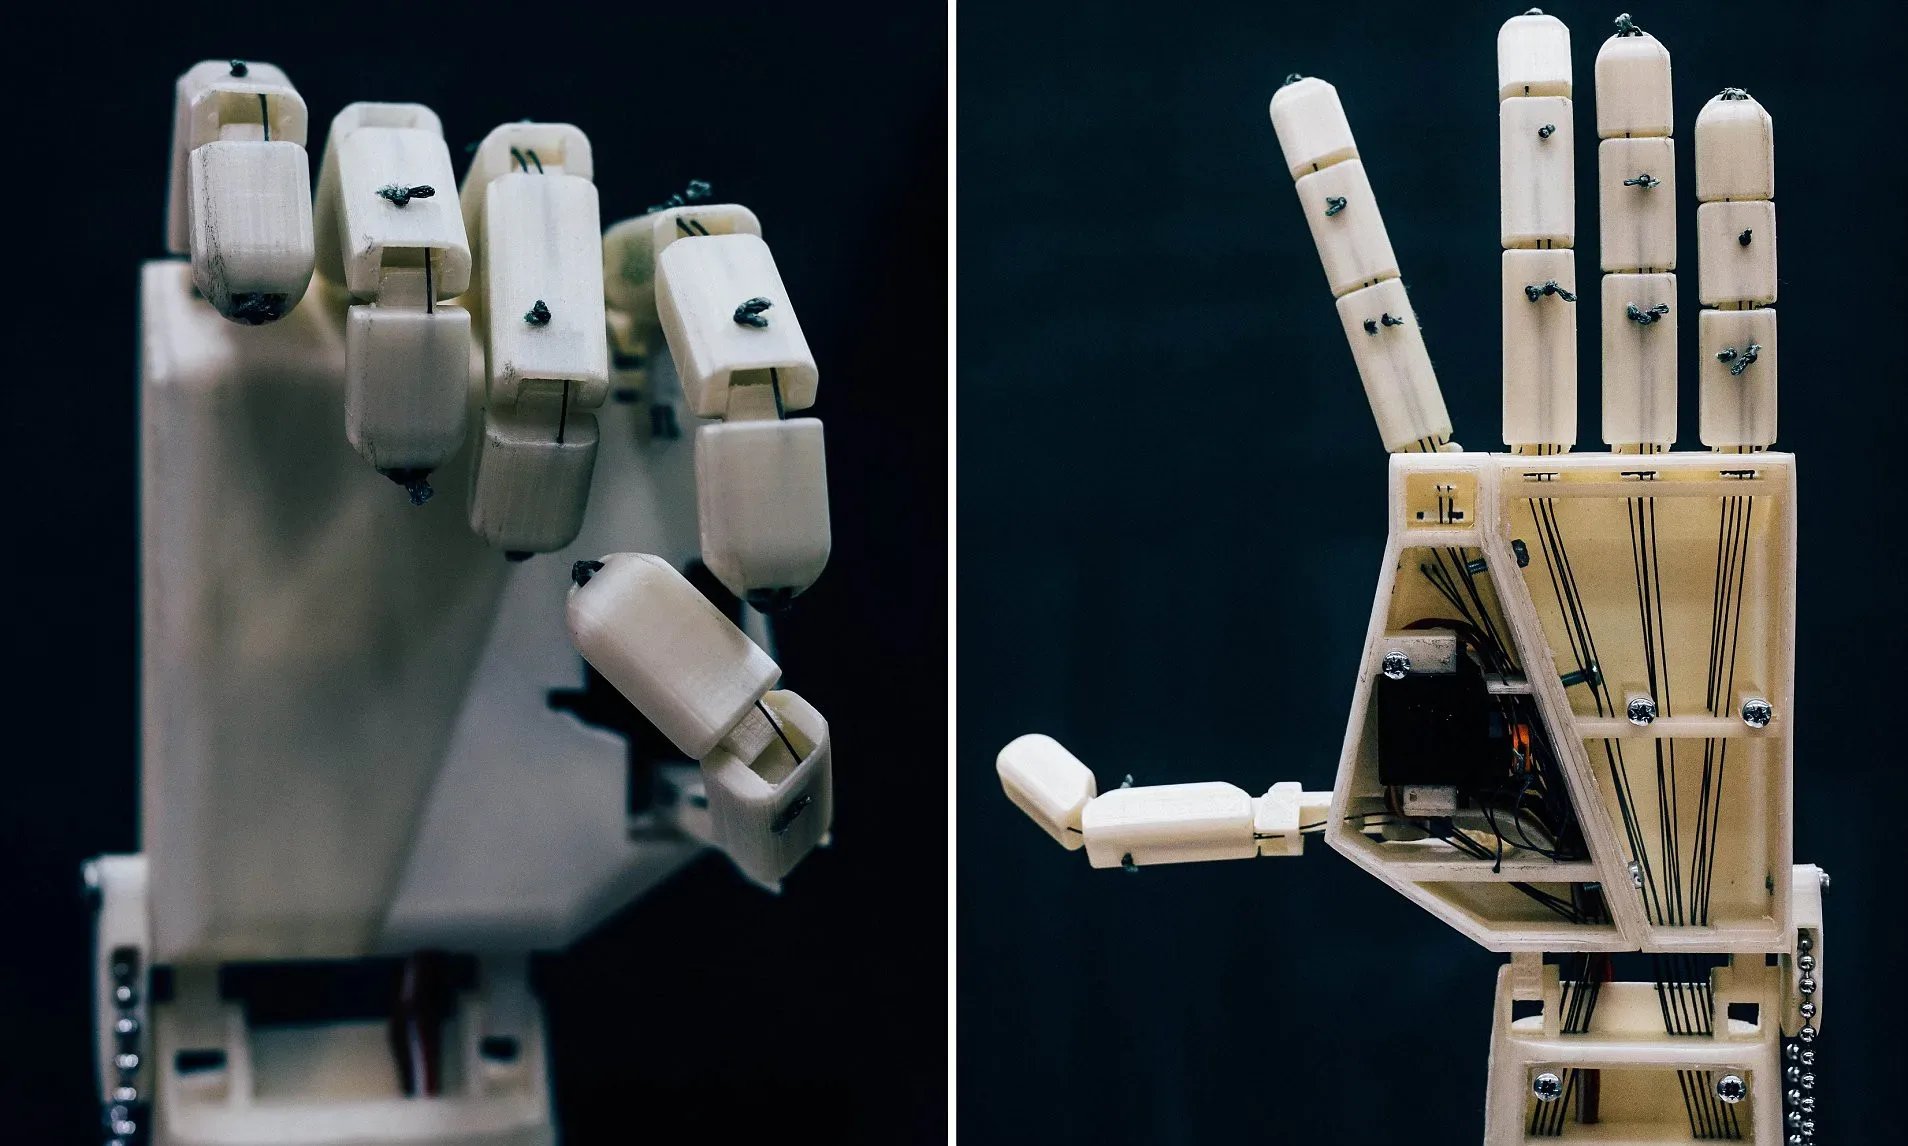 roboticka ruka prekladac hlucha komunita pomoc 3D vytlacena jpg webp